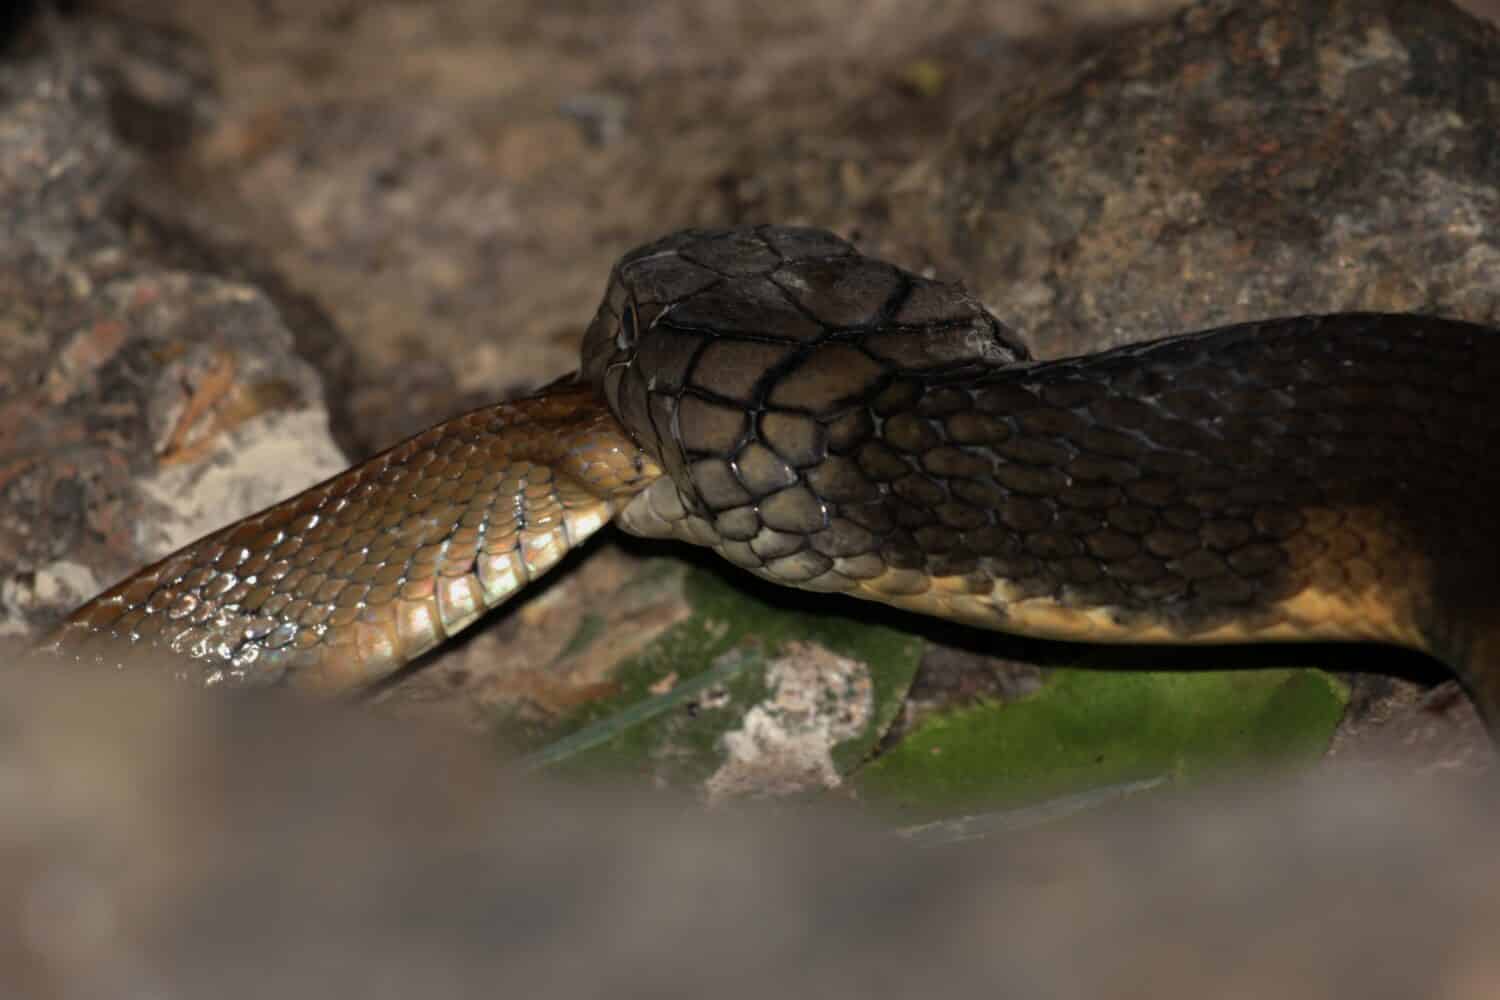 Allattamento.  King Cobra mangia i serpenti.